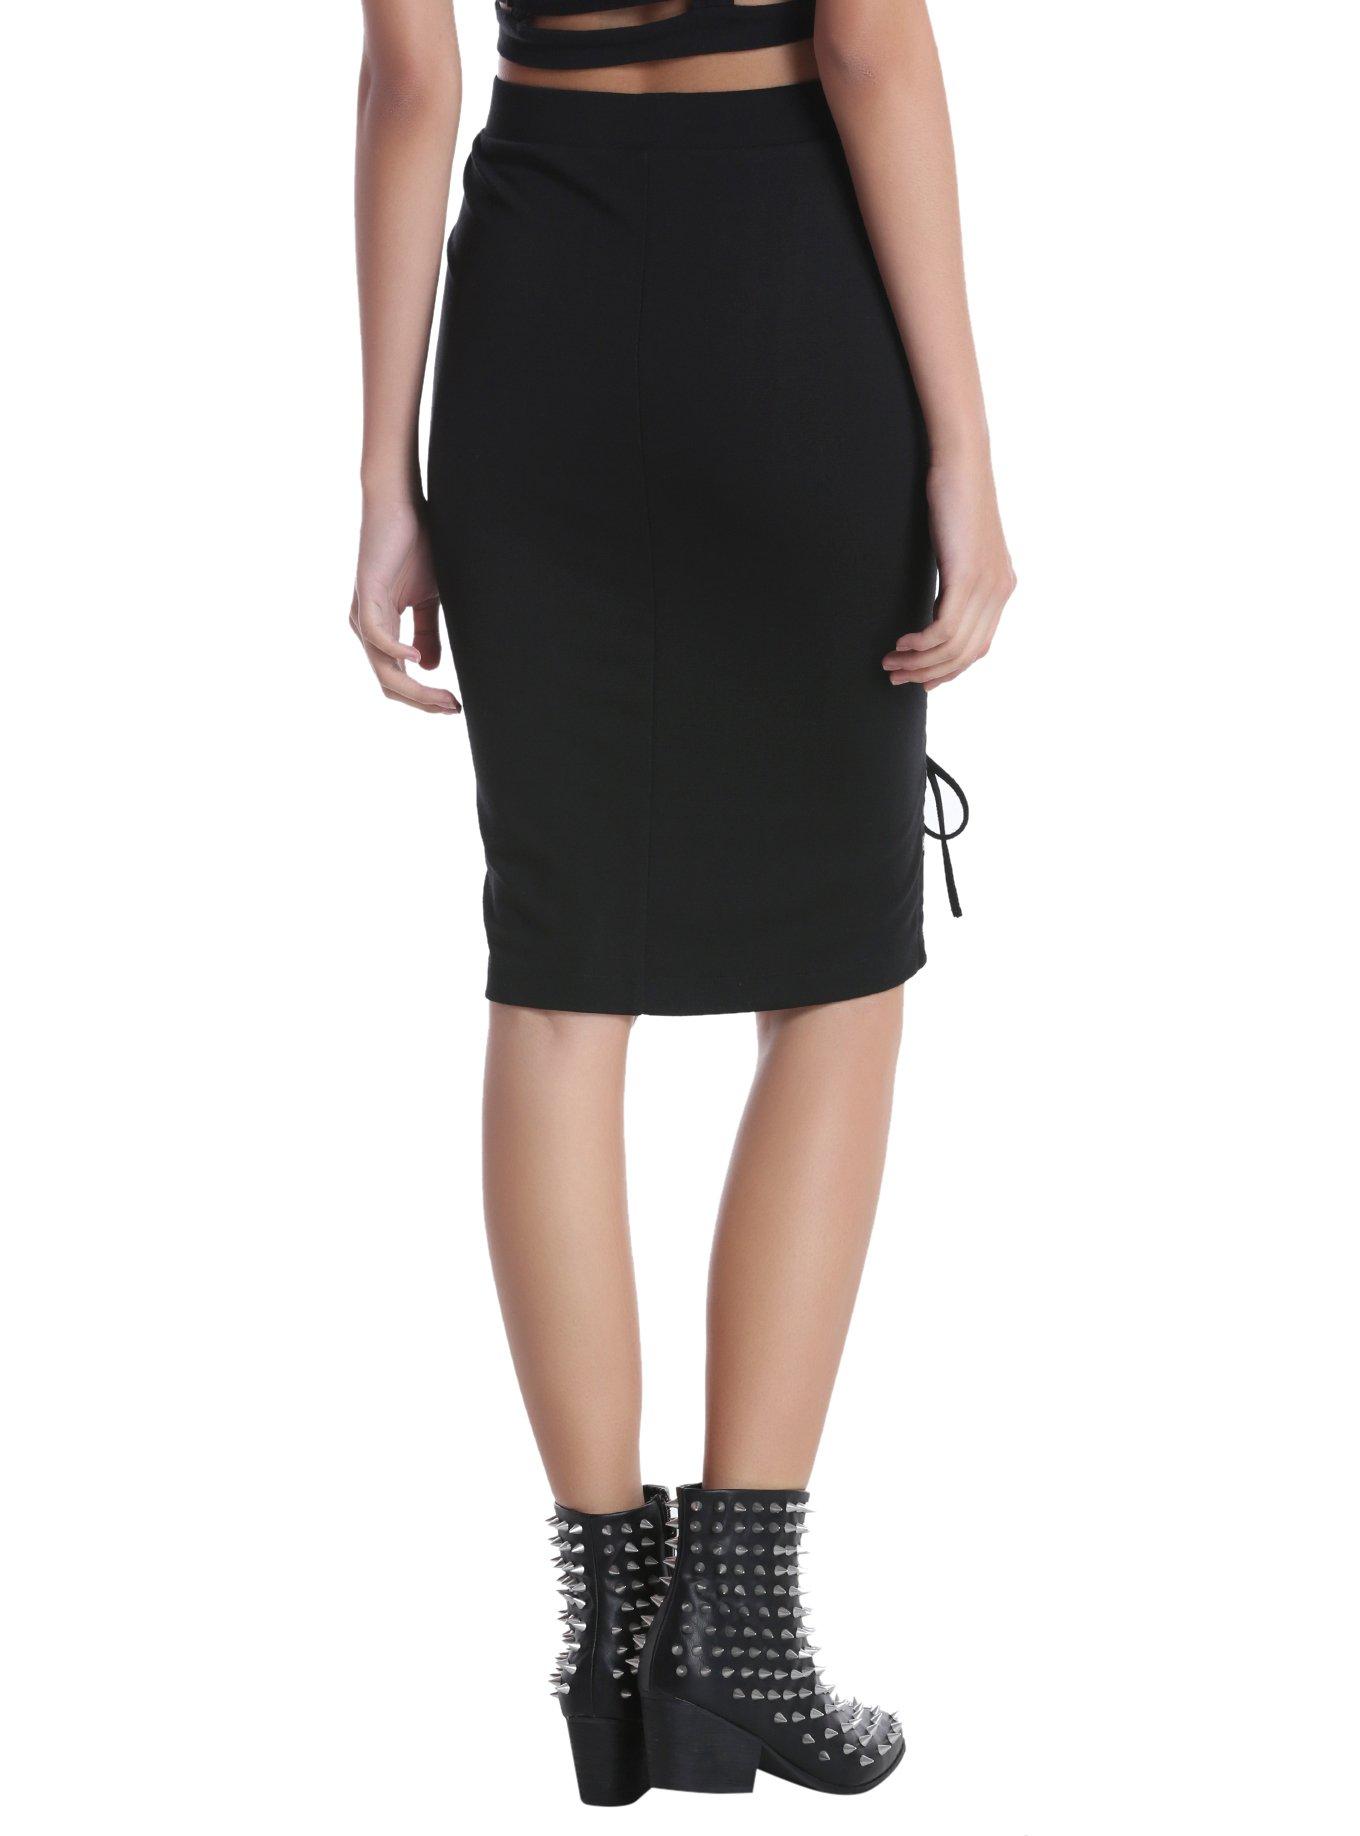 Black Lace-Up Front Pencil Skirt, , alternate